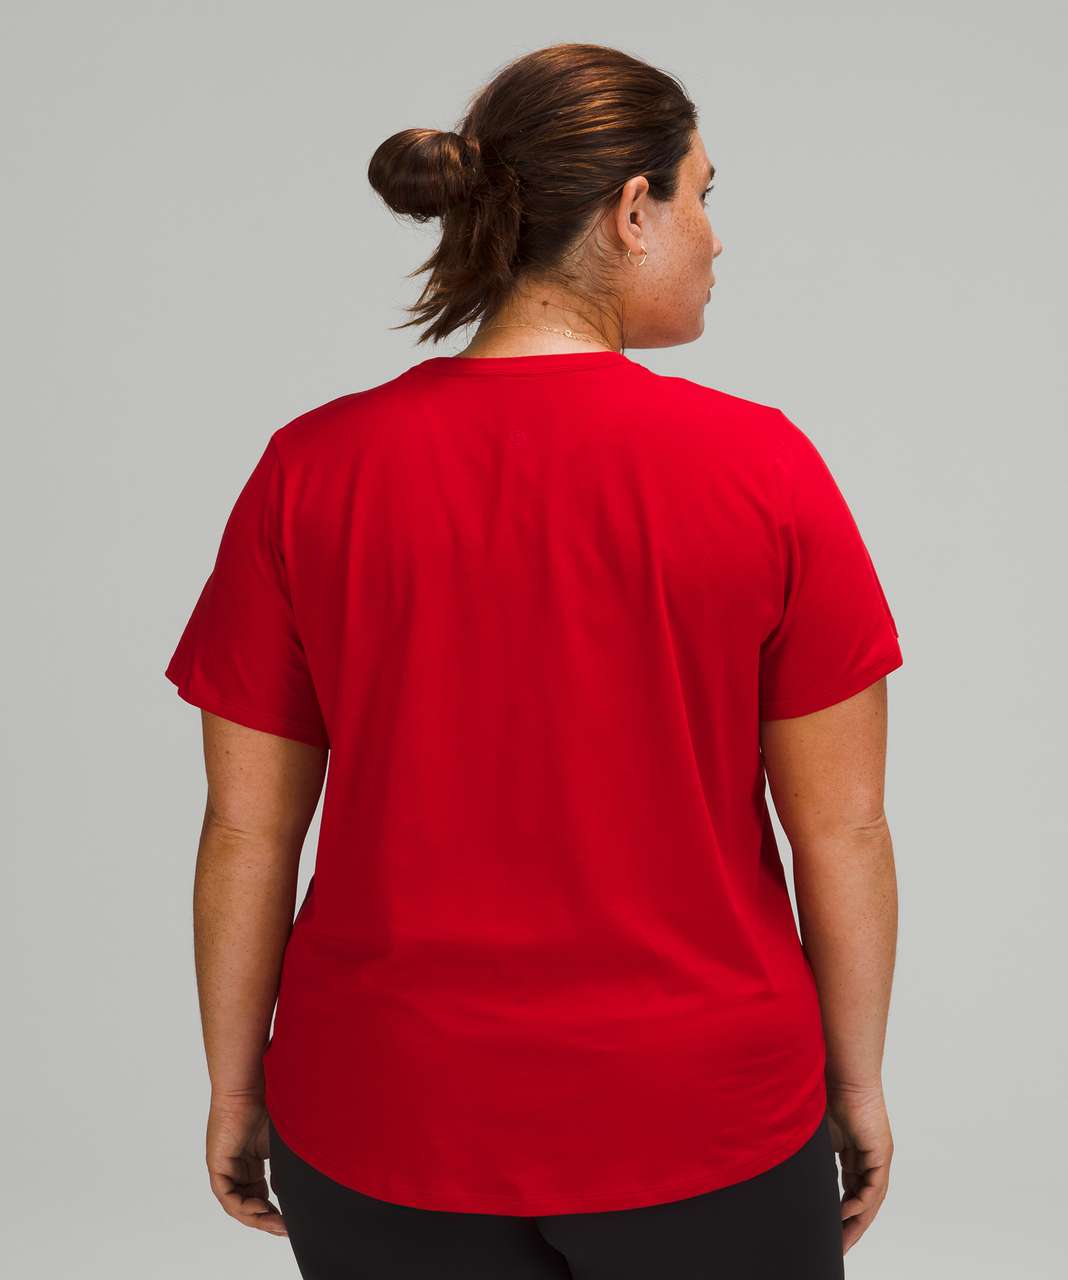 Lululemon Love Crew Short Sleeve T-Shirt - Dark Red